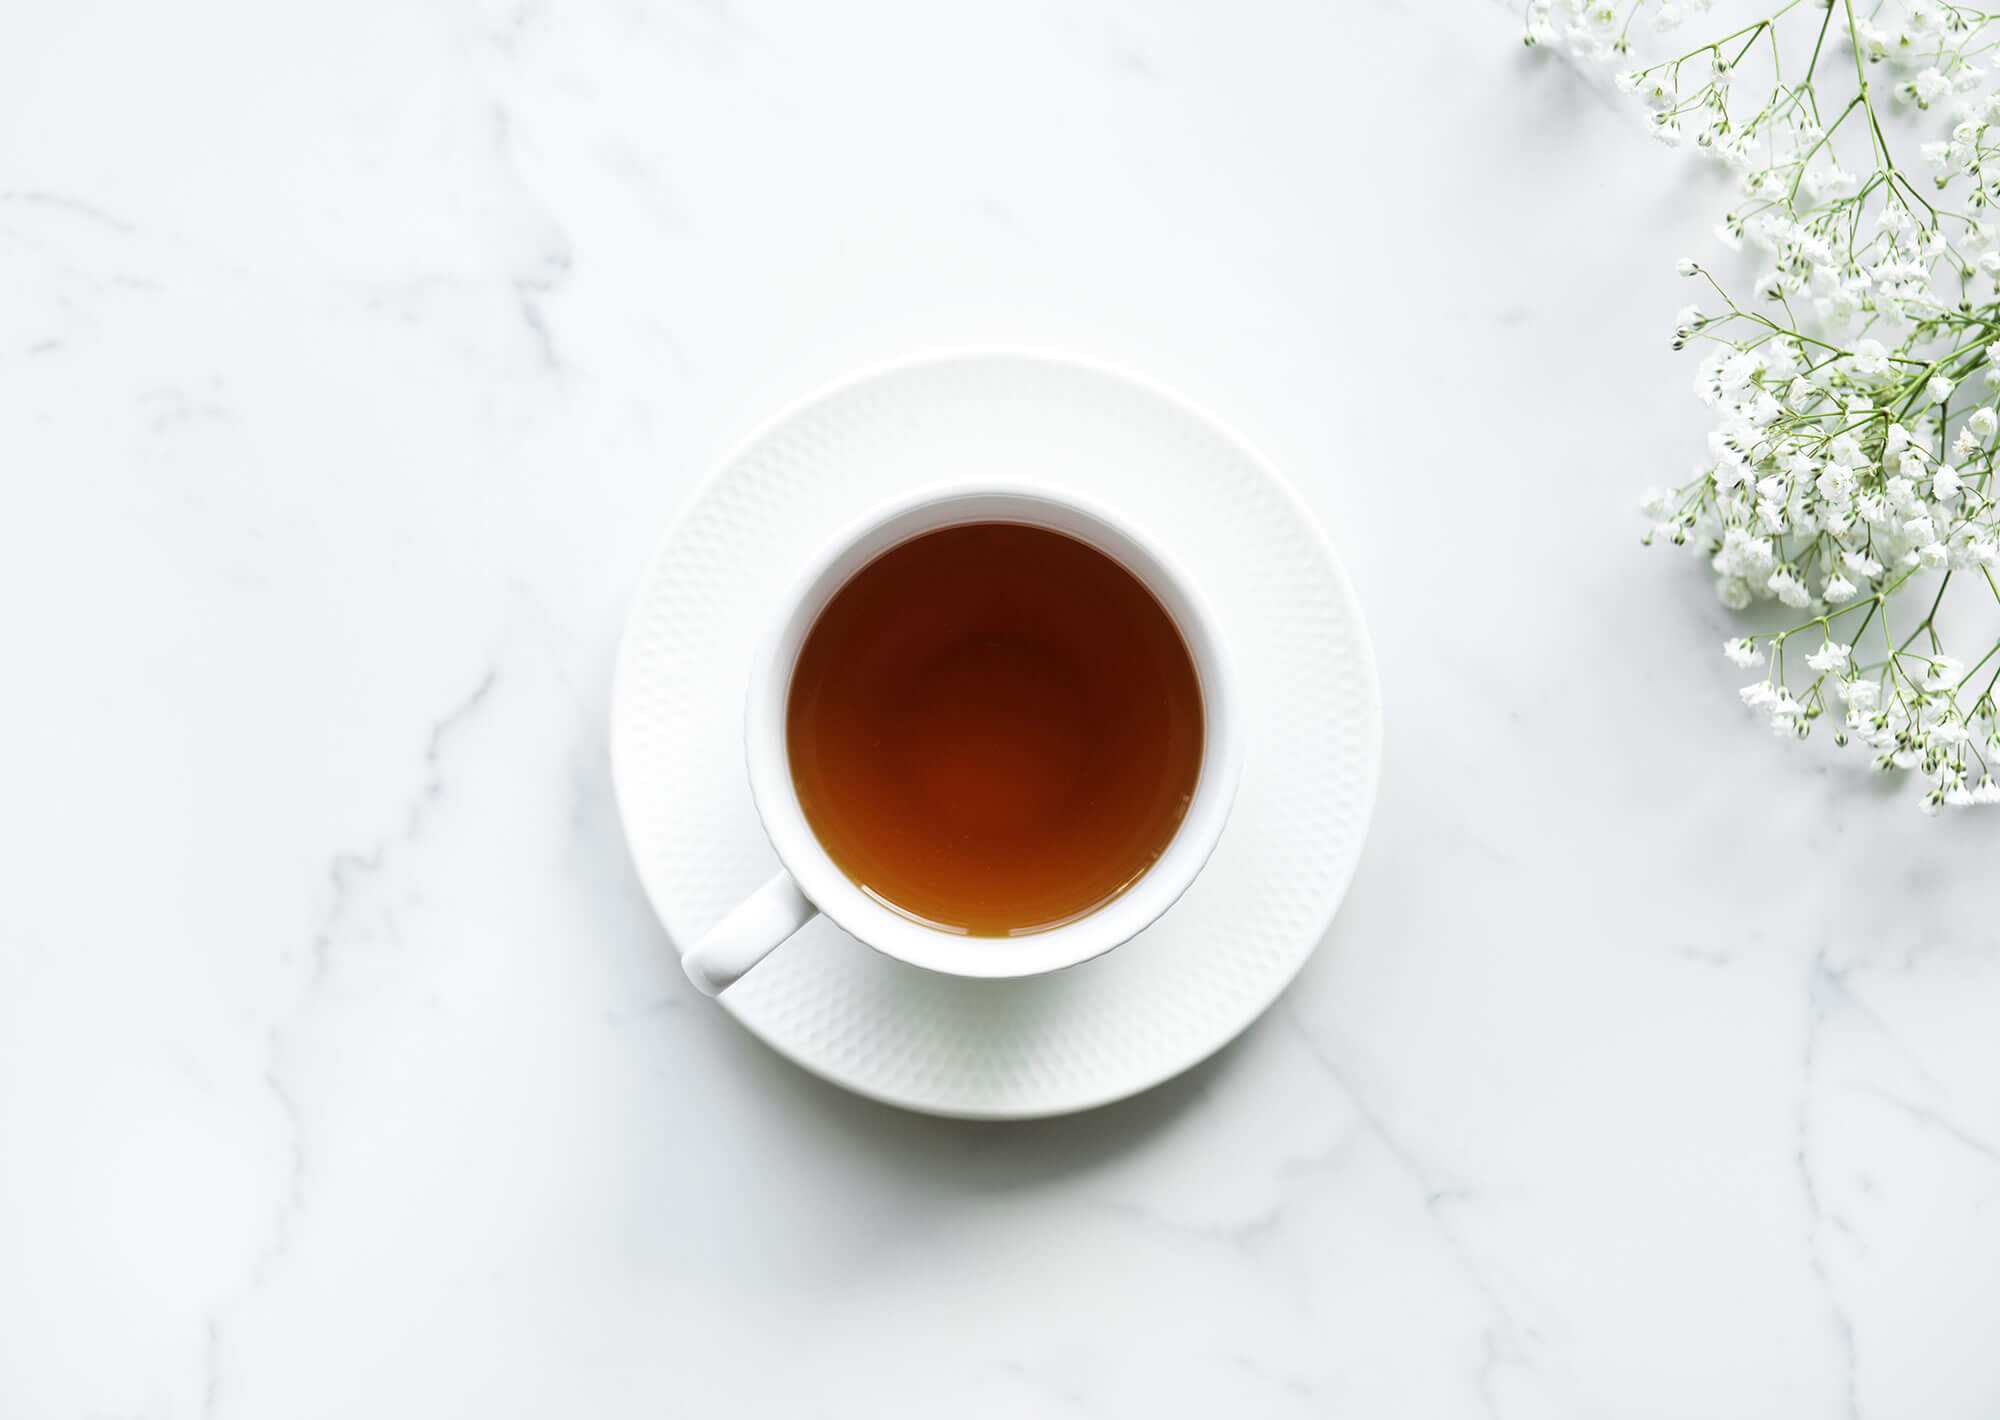 Passionflower tea